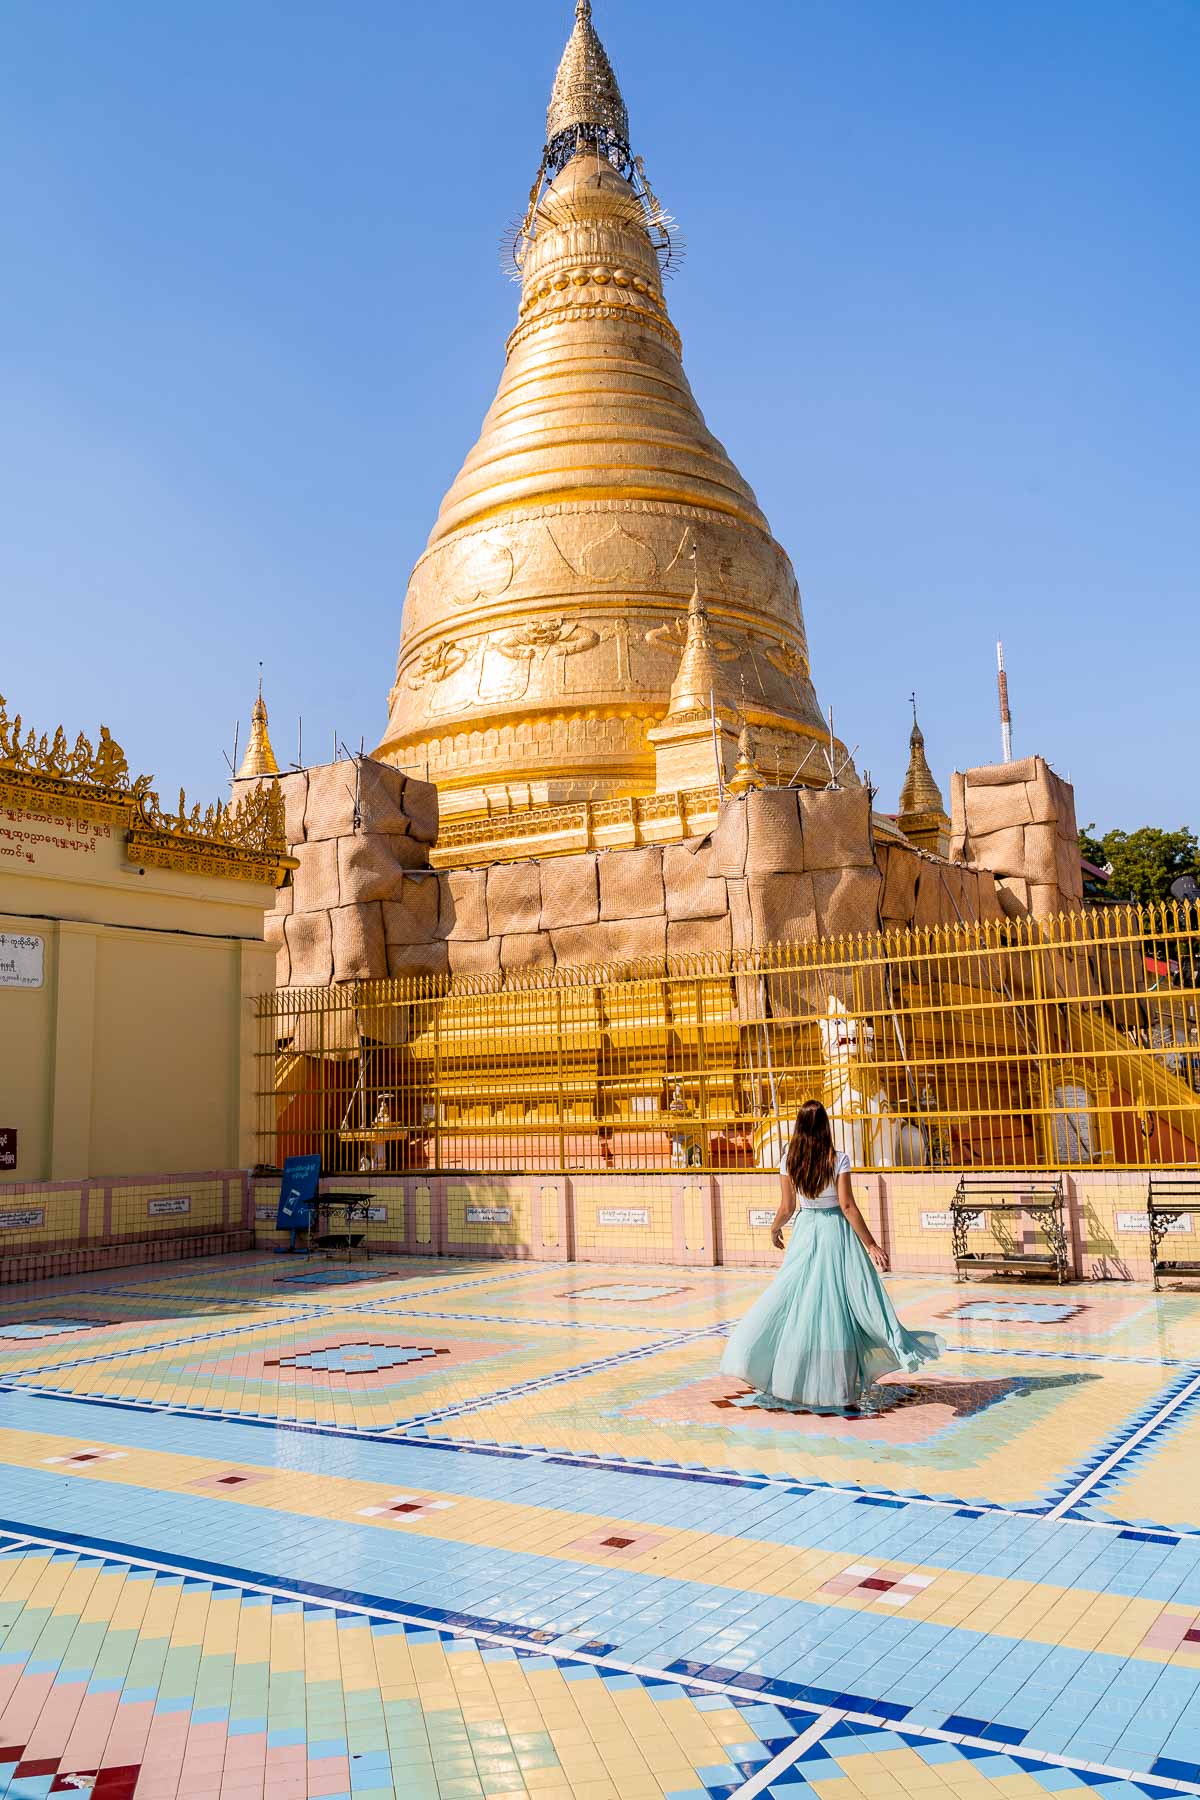 Girl in blue skirt at Soon U Ponya Shin Pagoda in Sagaing, Myanmar